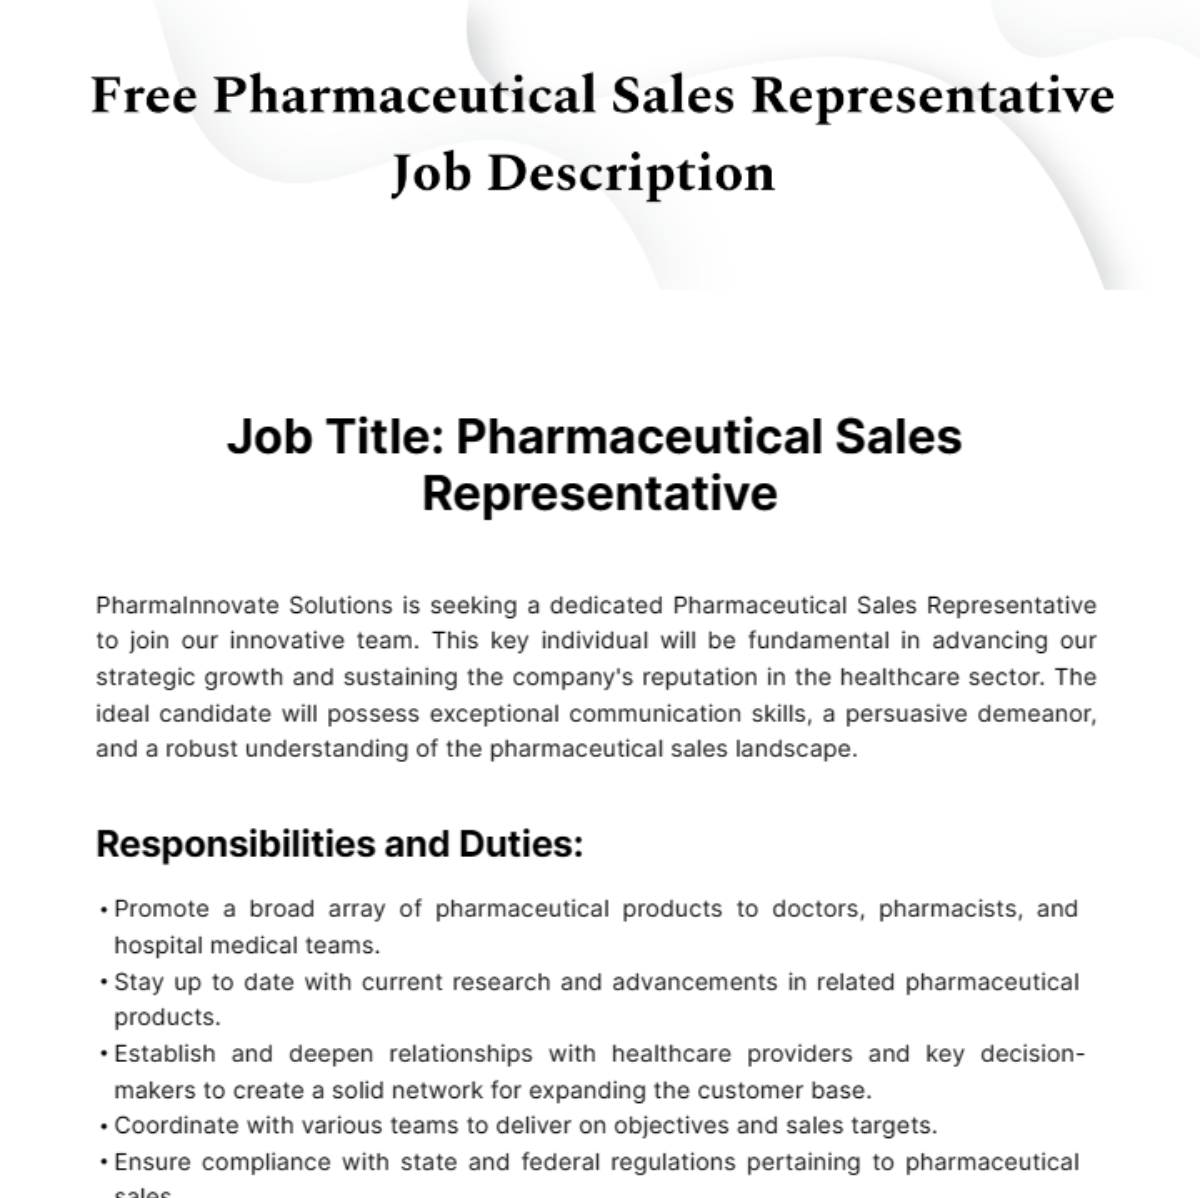 Free Pharmaceutical Sales Representative Job Description Template